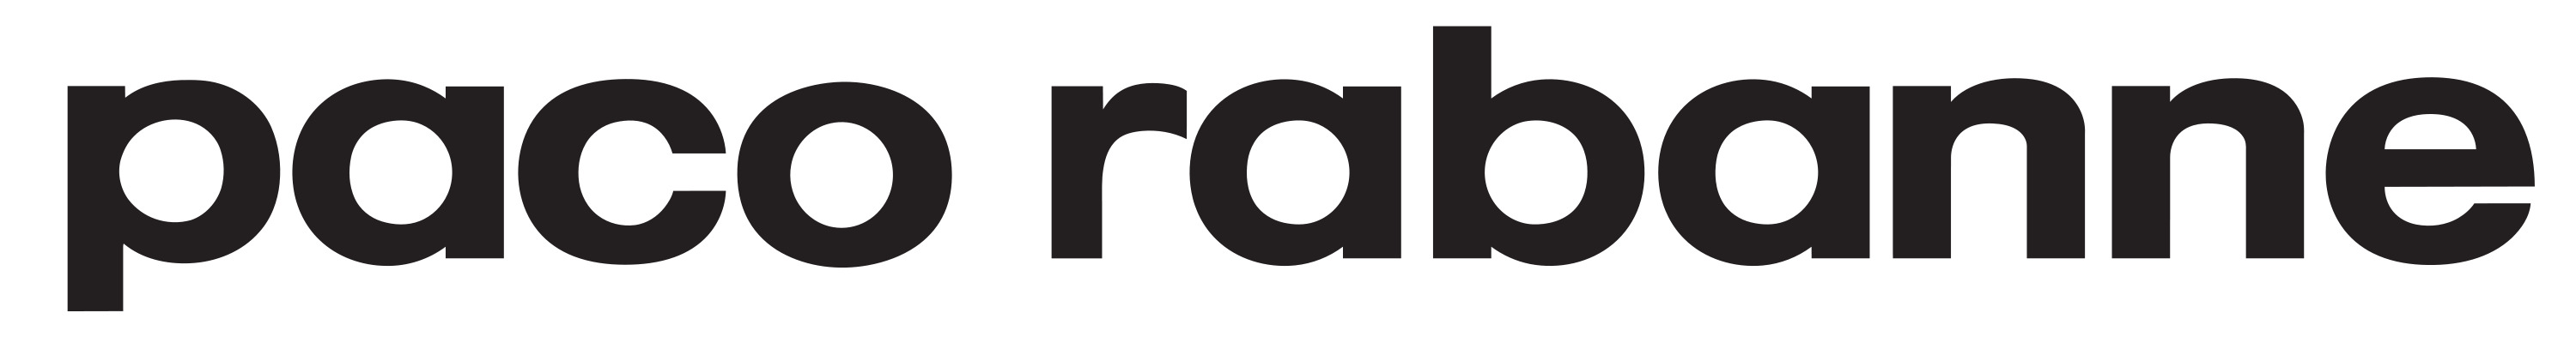 Paco Rabanne Logo icons